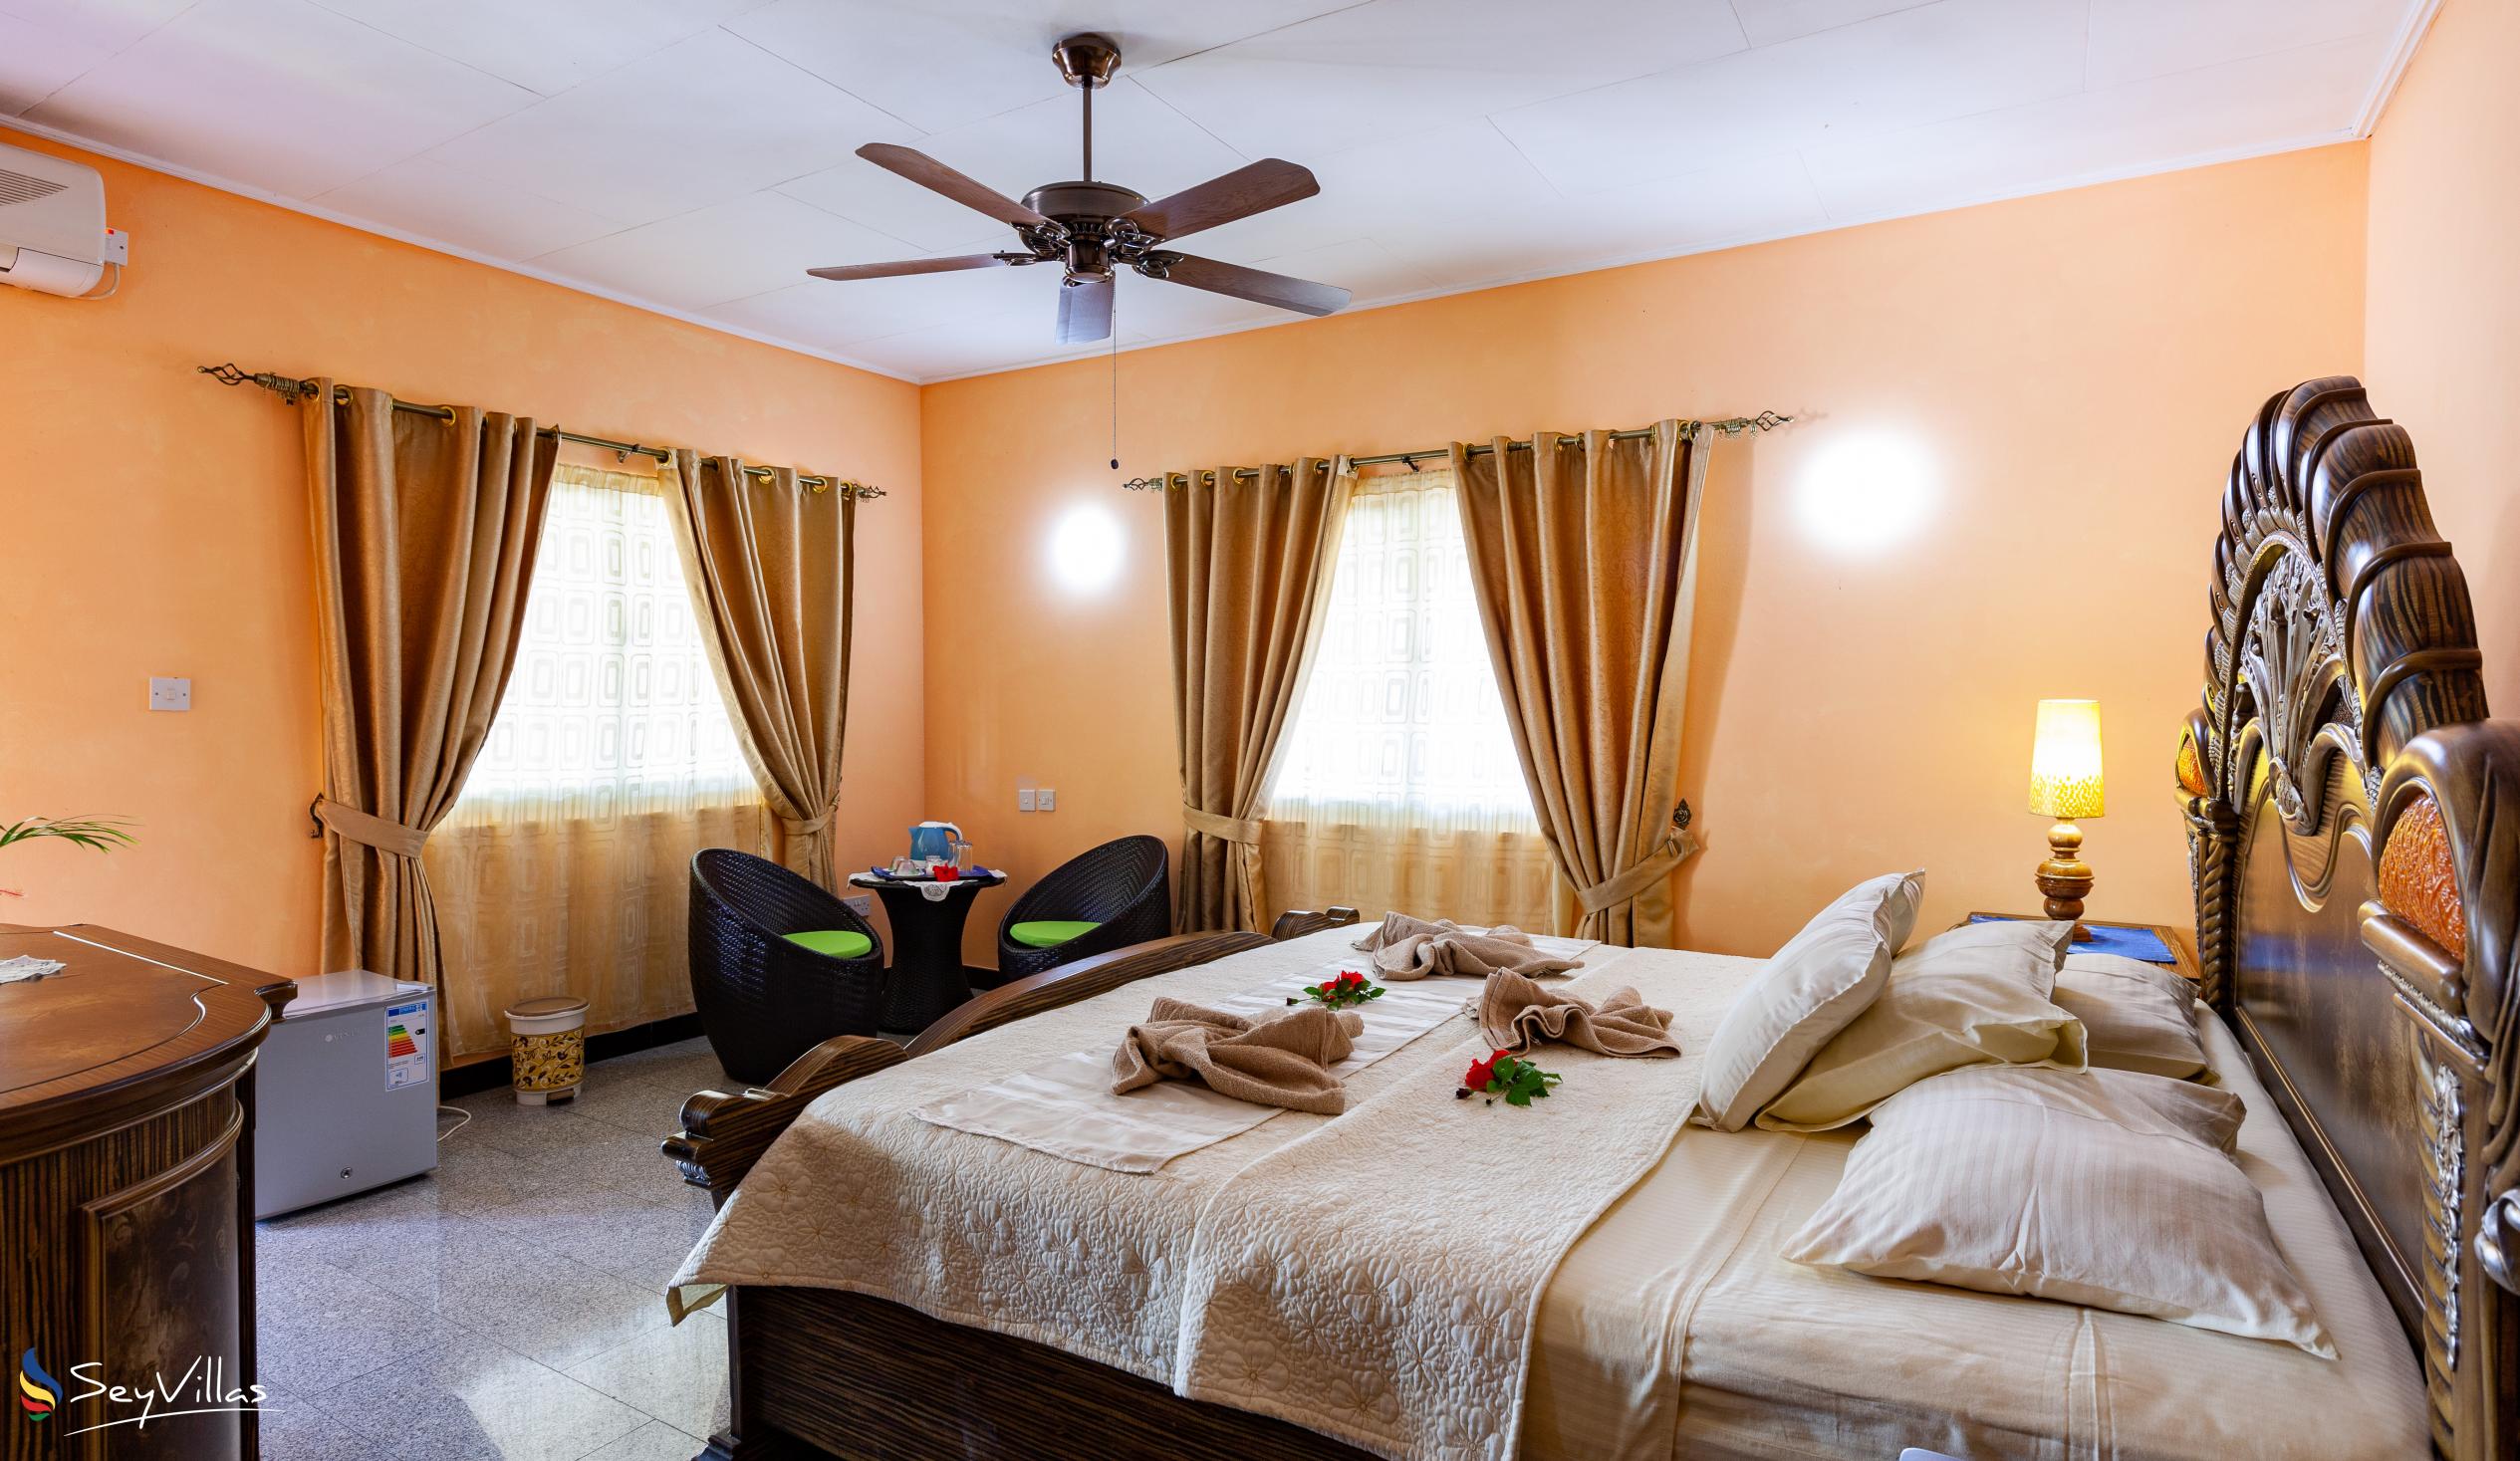 Photo 118: Villa Bananier - Superior Room - Praslin (Seychelles)